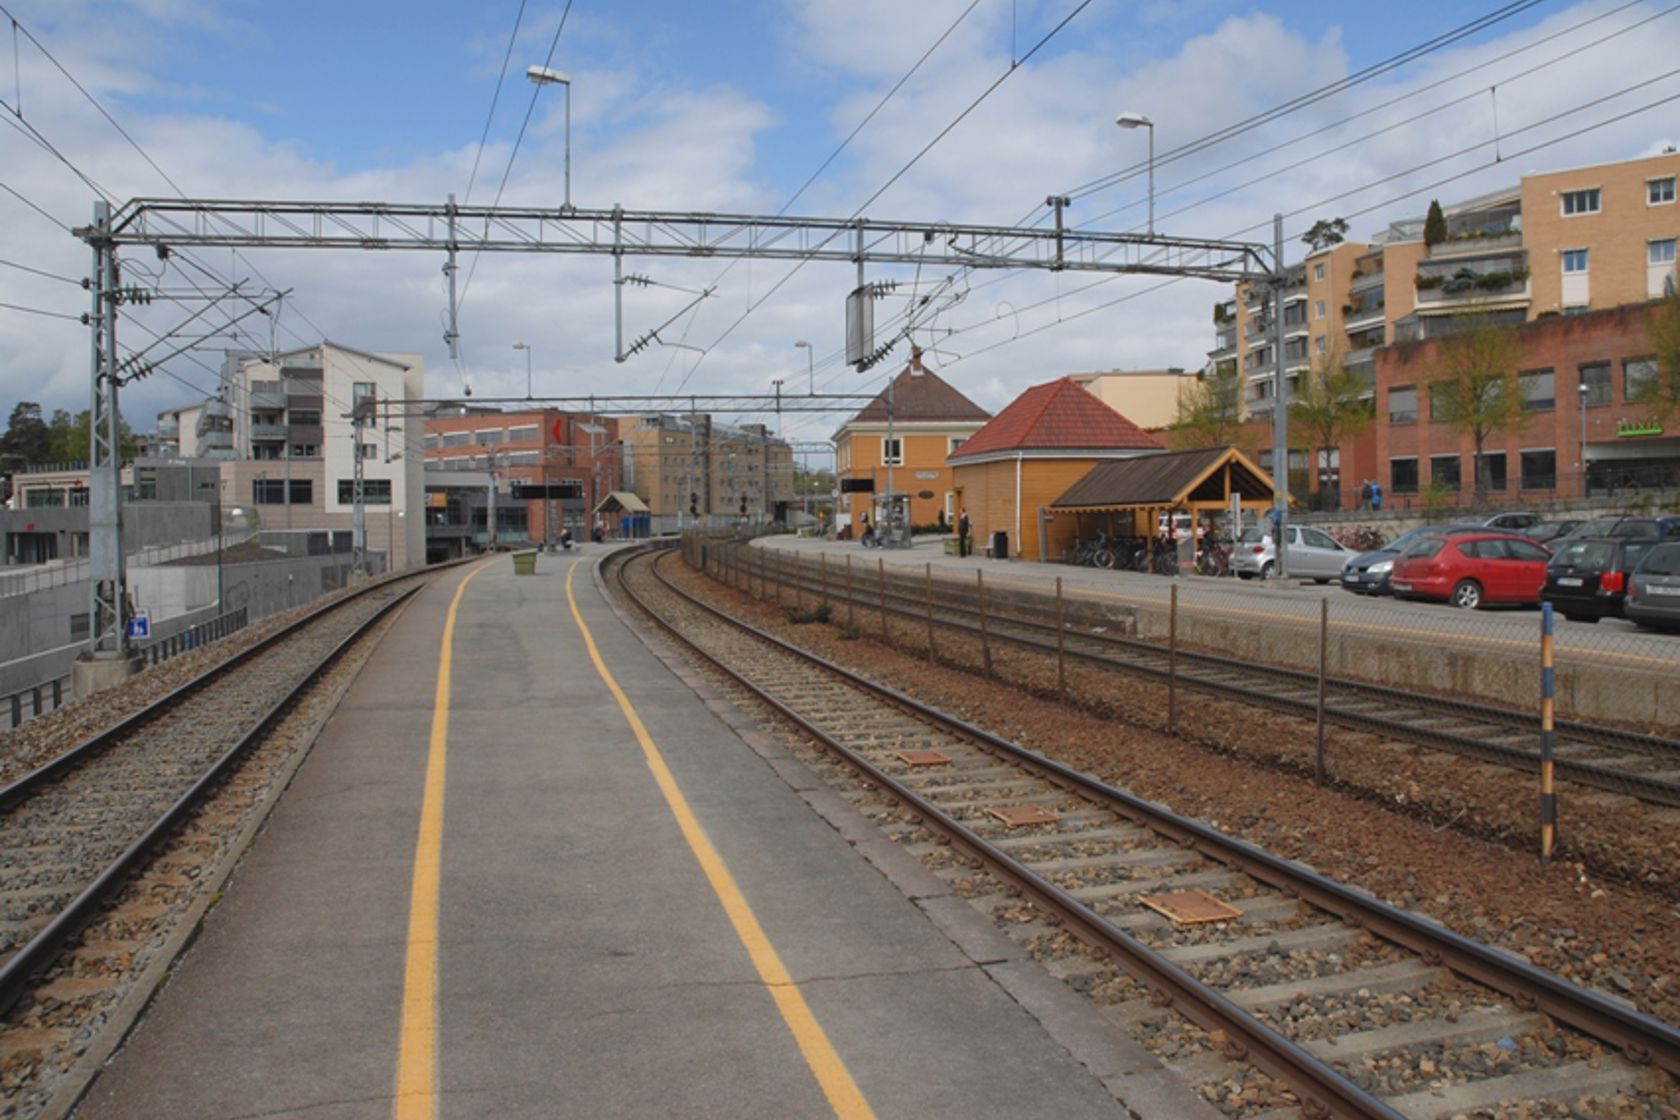 Plattform og togspor